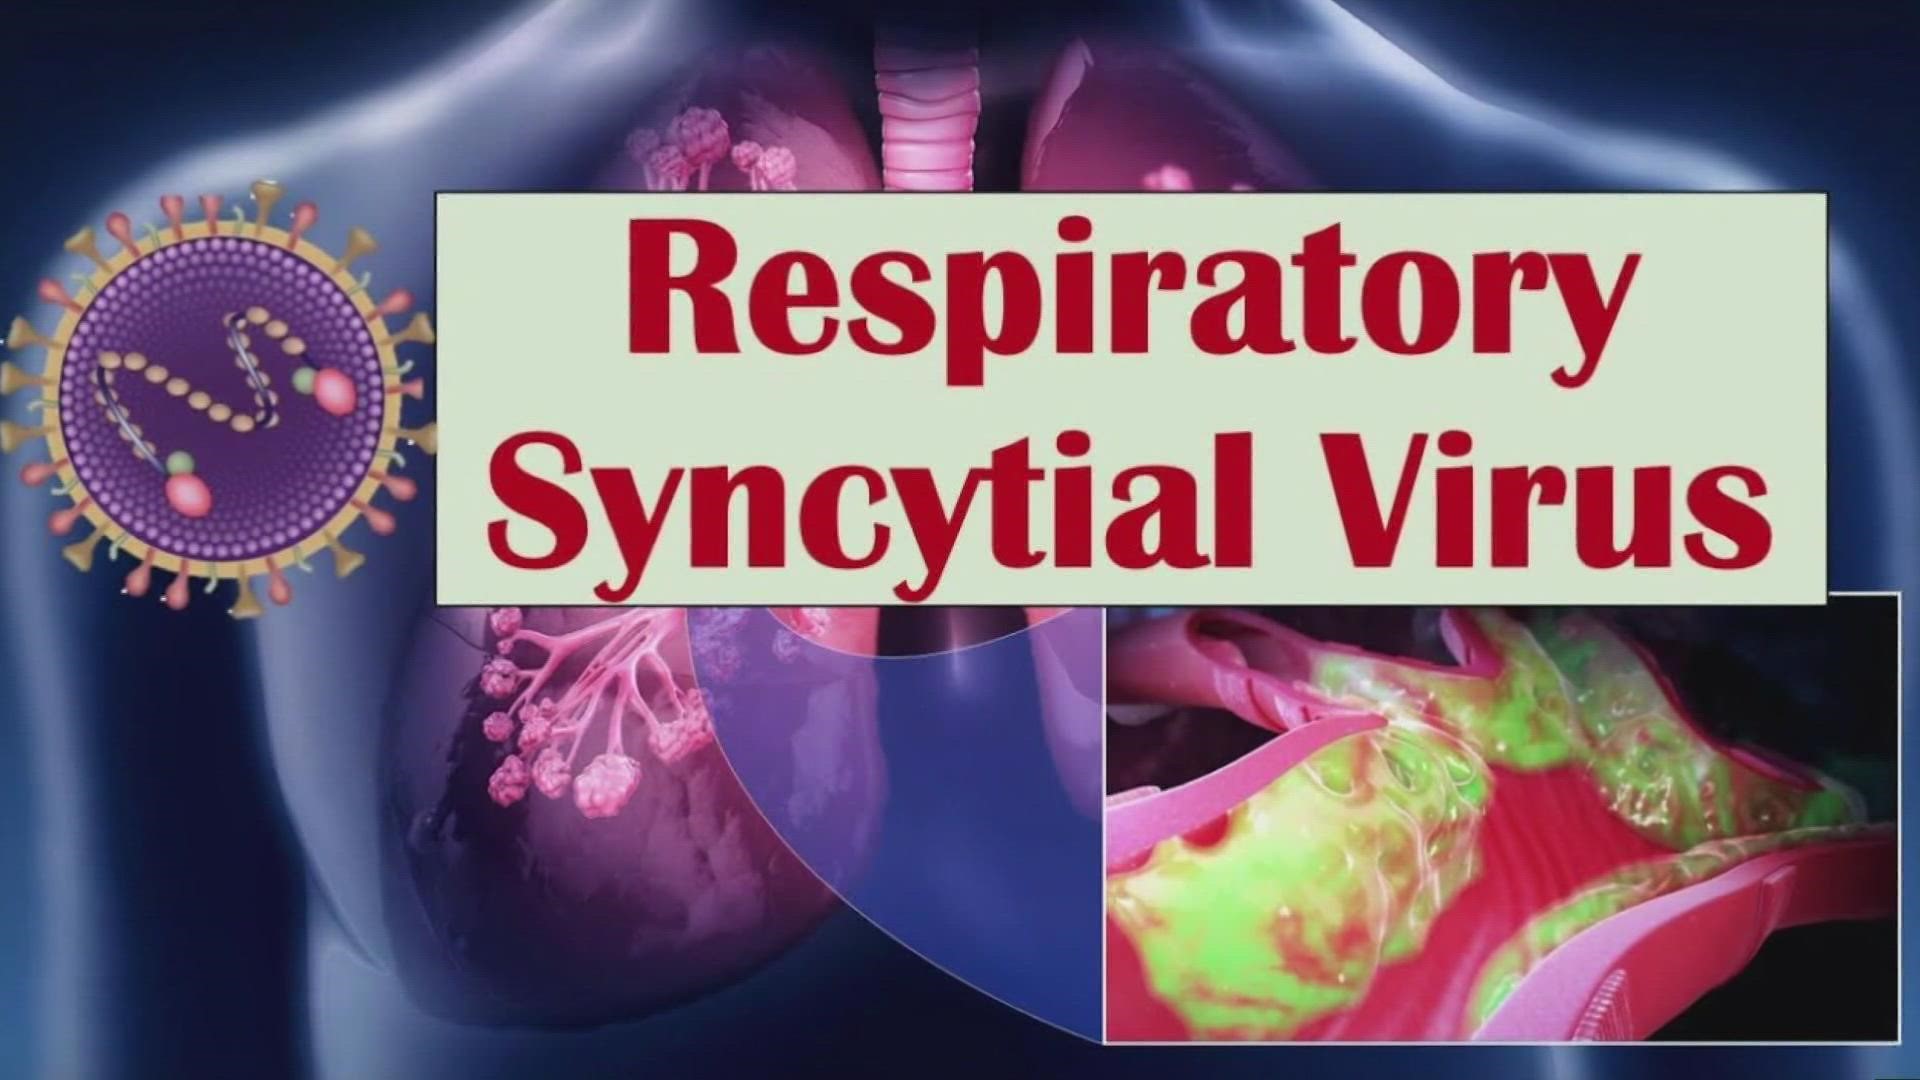 Respiratory Syncytial Virus Treatment